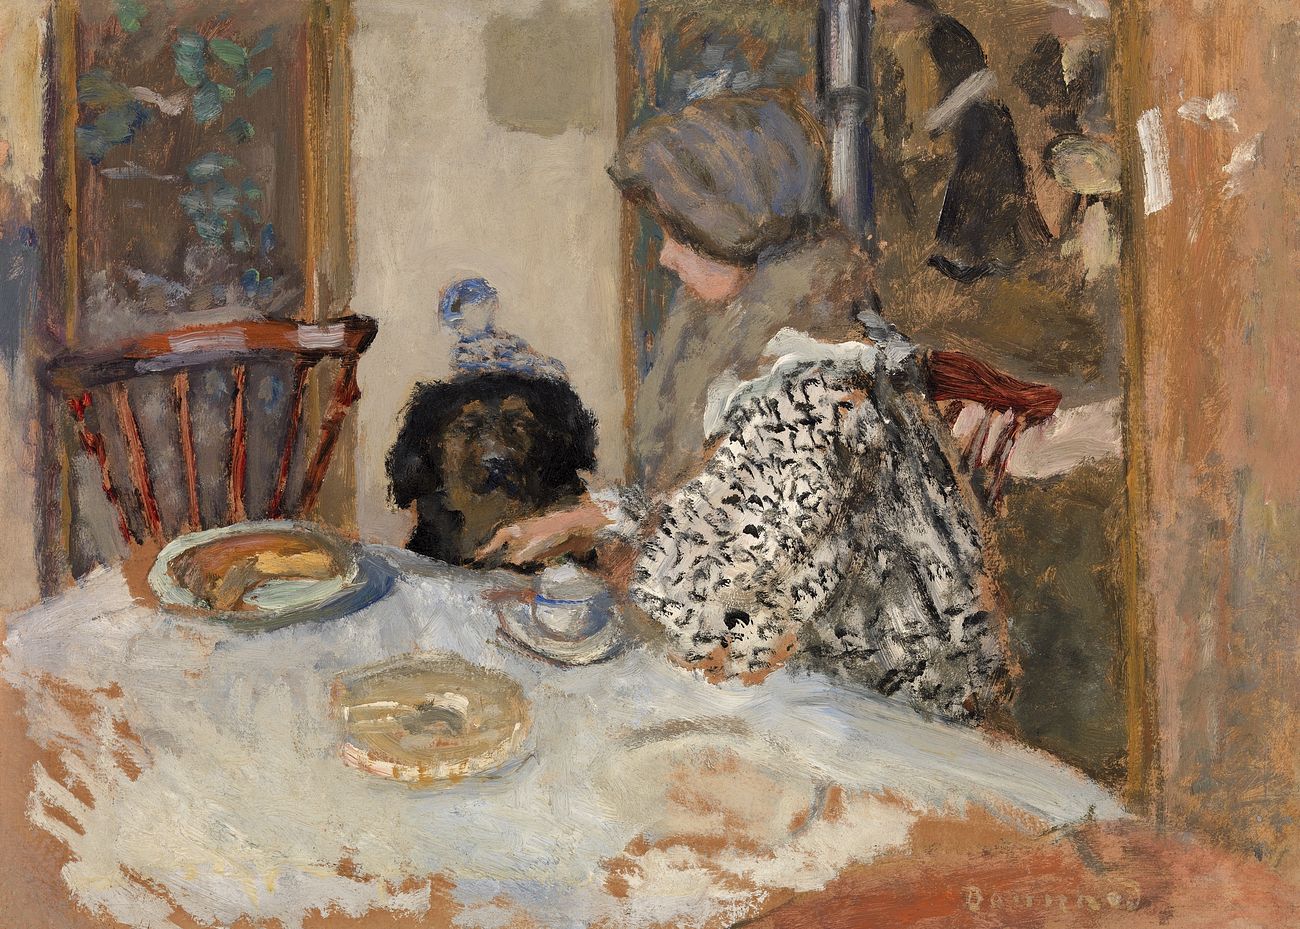 Woman and Dog at Table